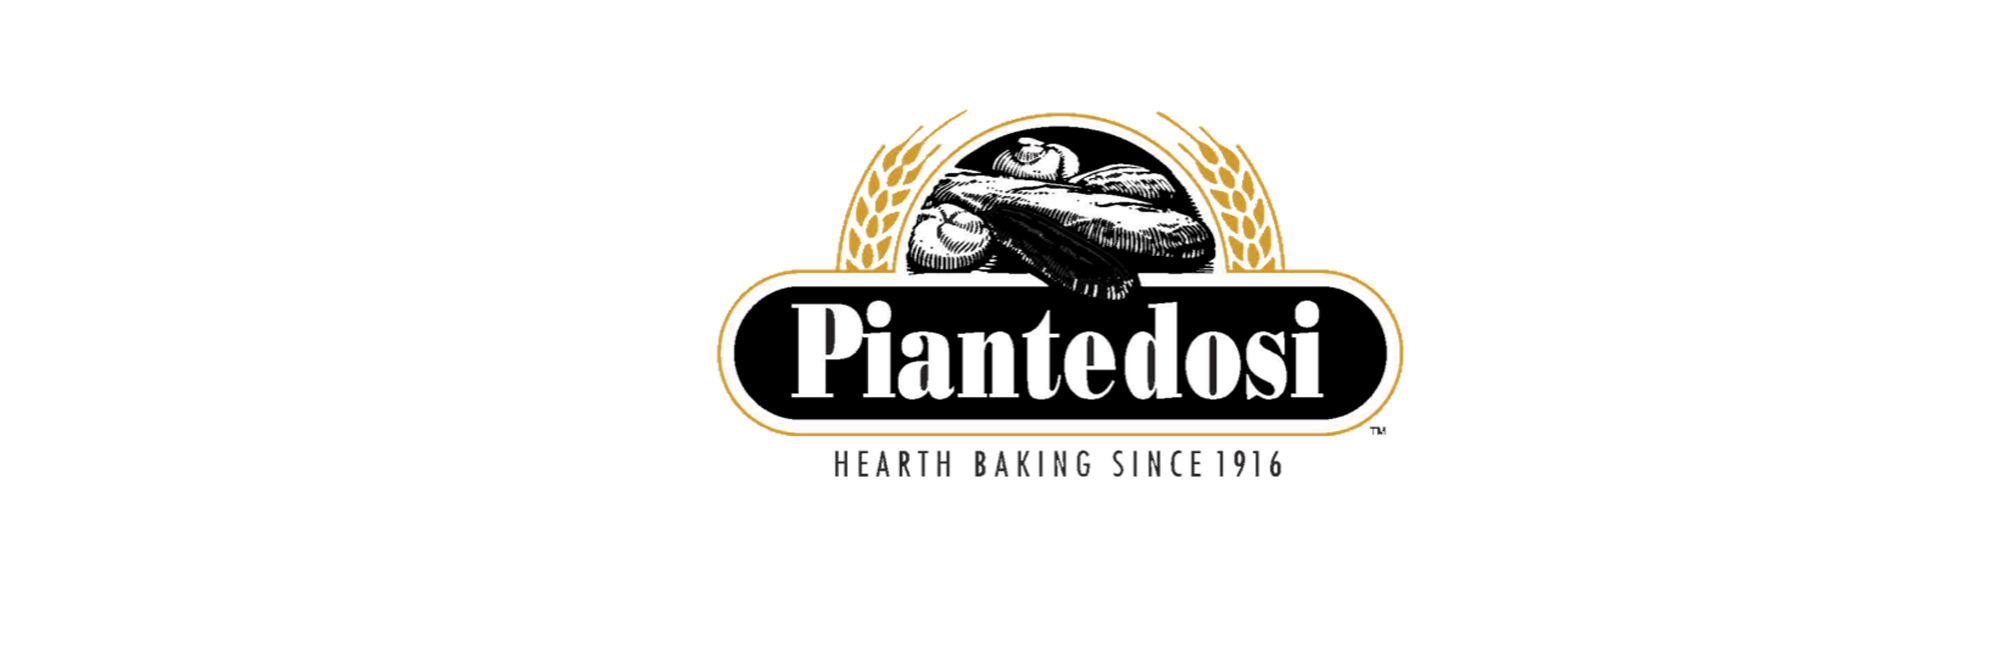 Piantedosi Bread Header Logo